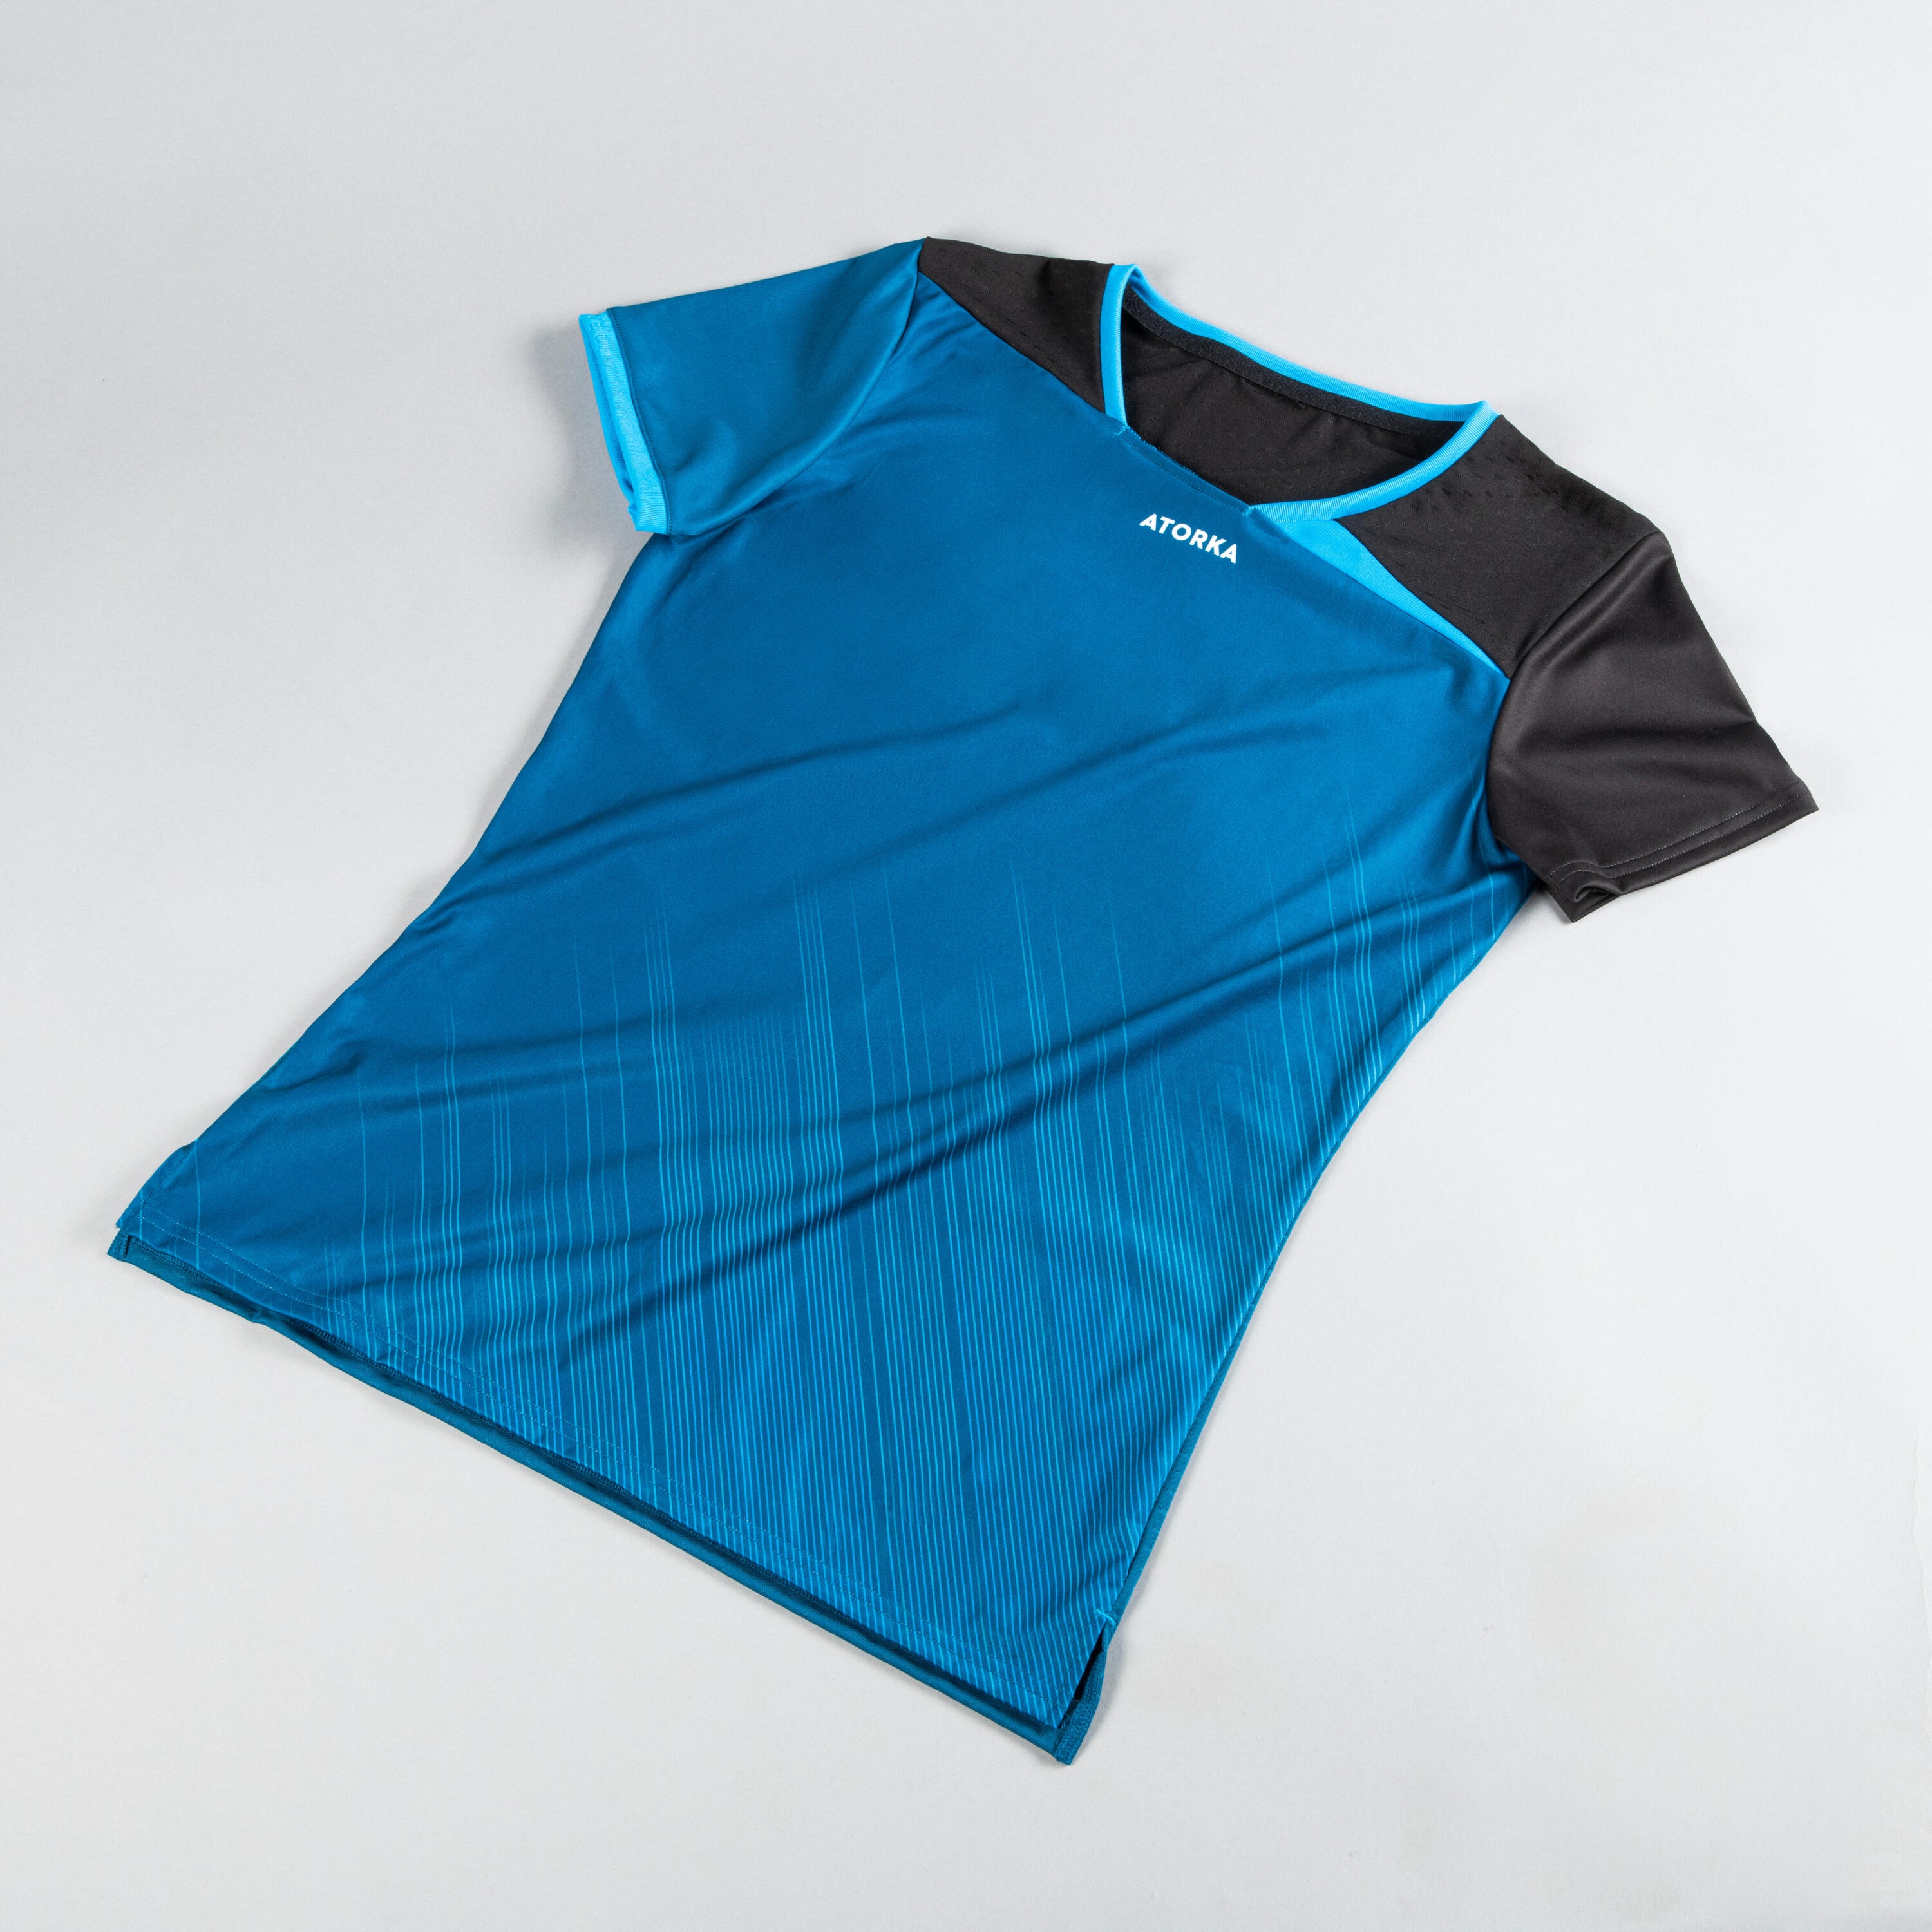 Women's Short-Sleeved Handball Jersey H500 - Blue/Black 6/12